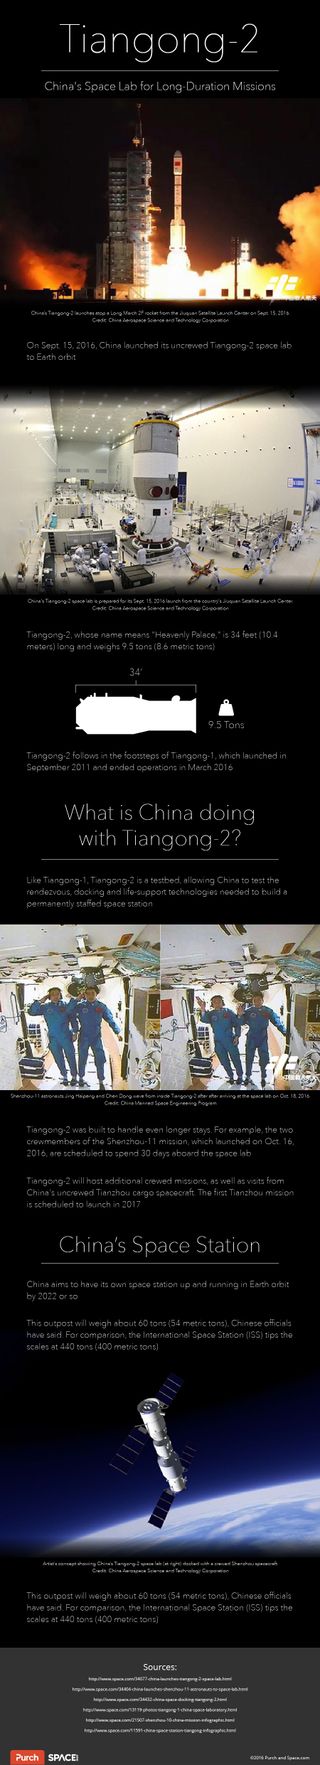 Tiangong-2 Infographic